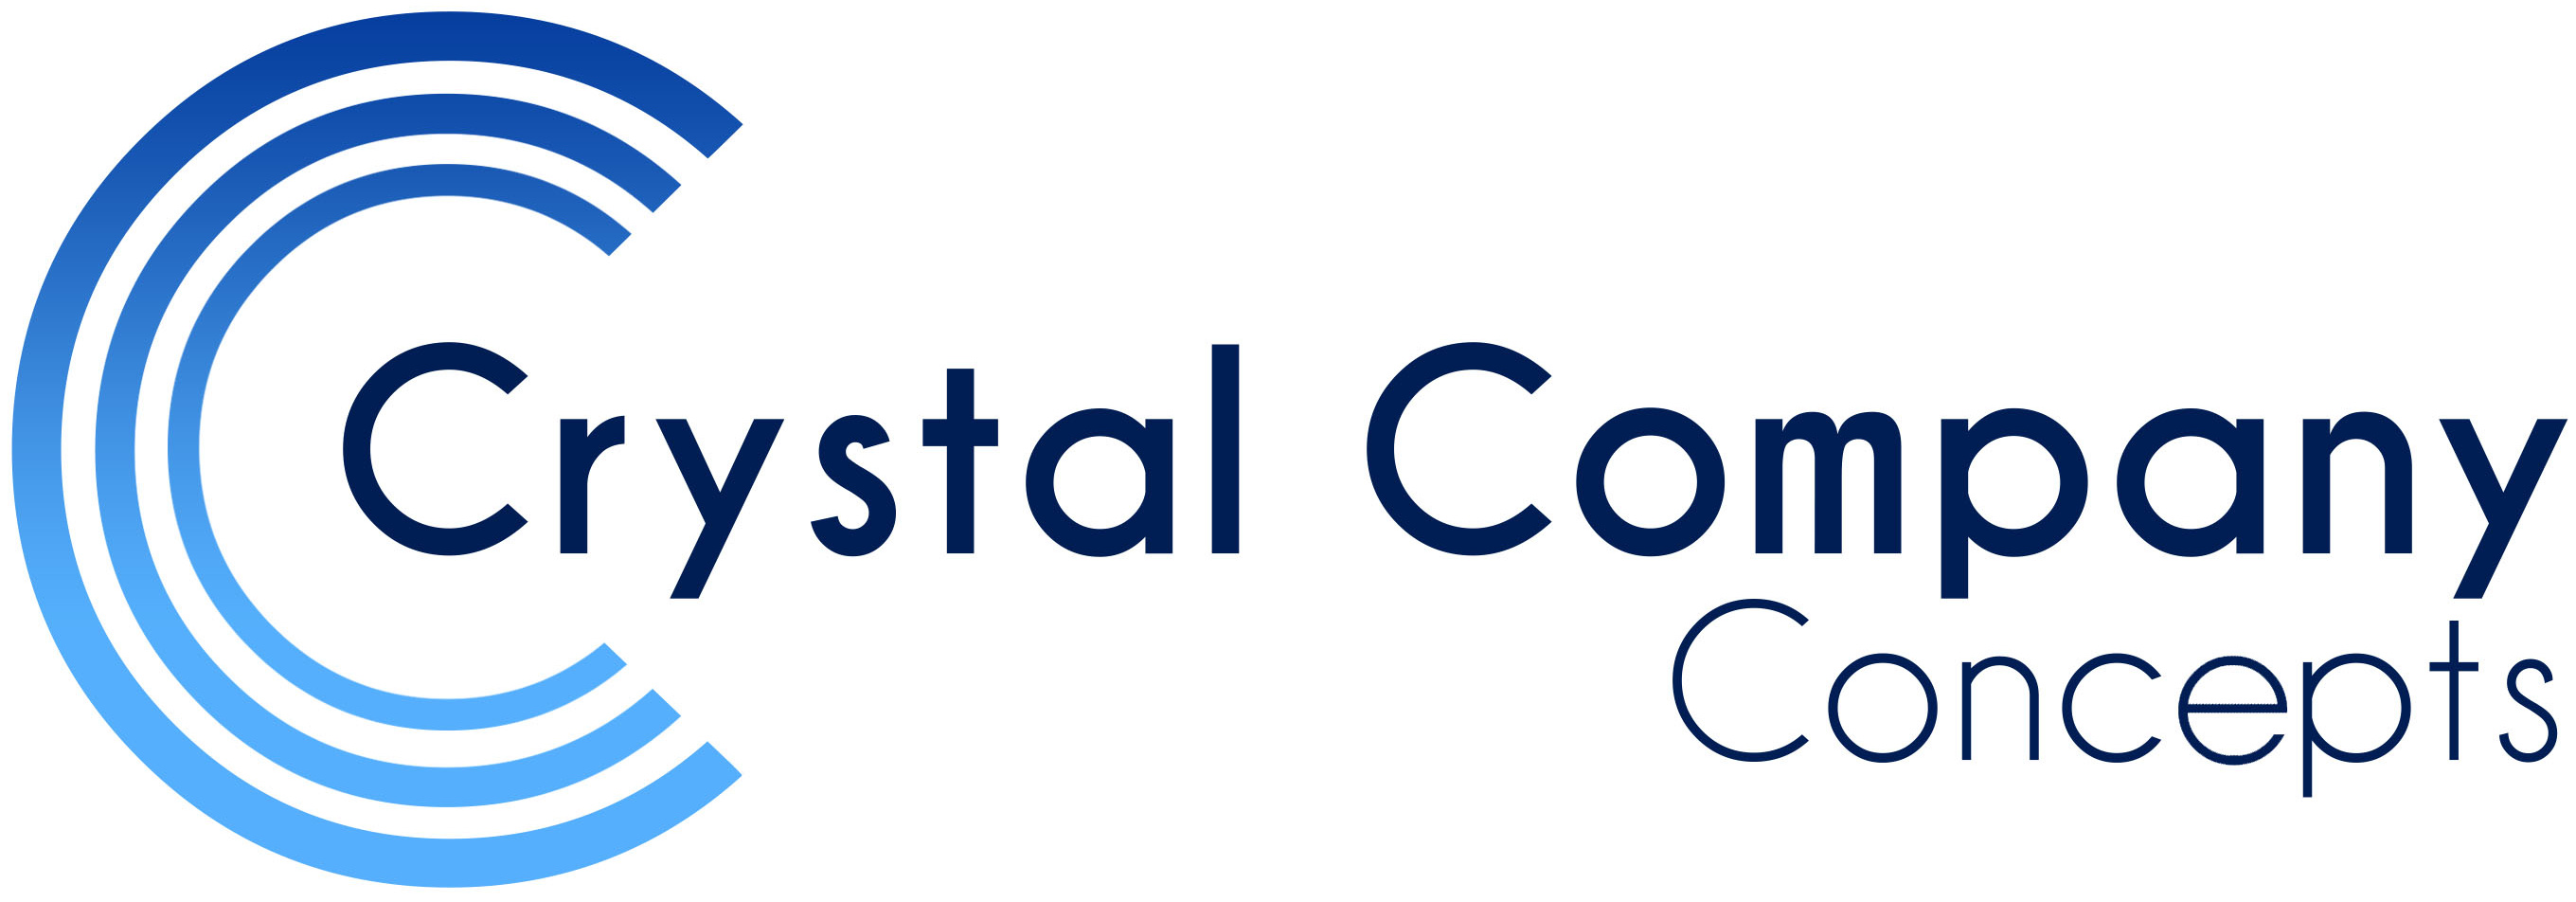 Crystal Company Concepts